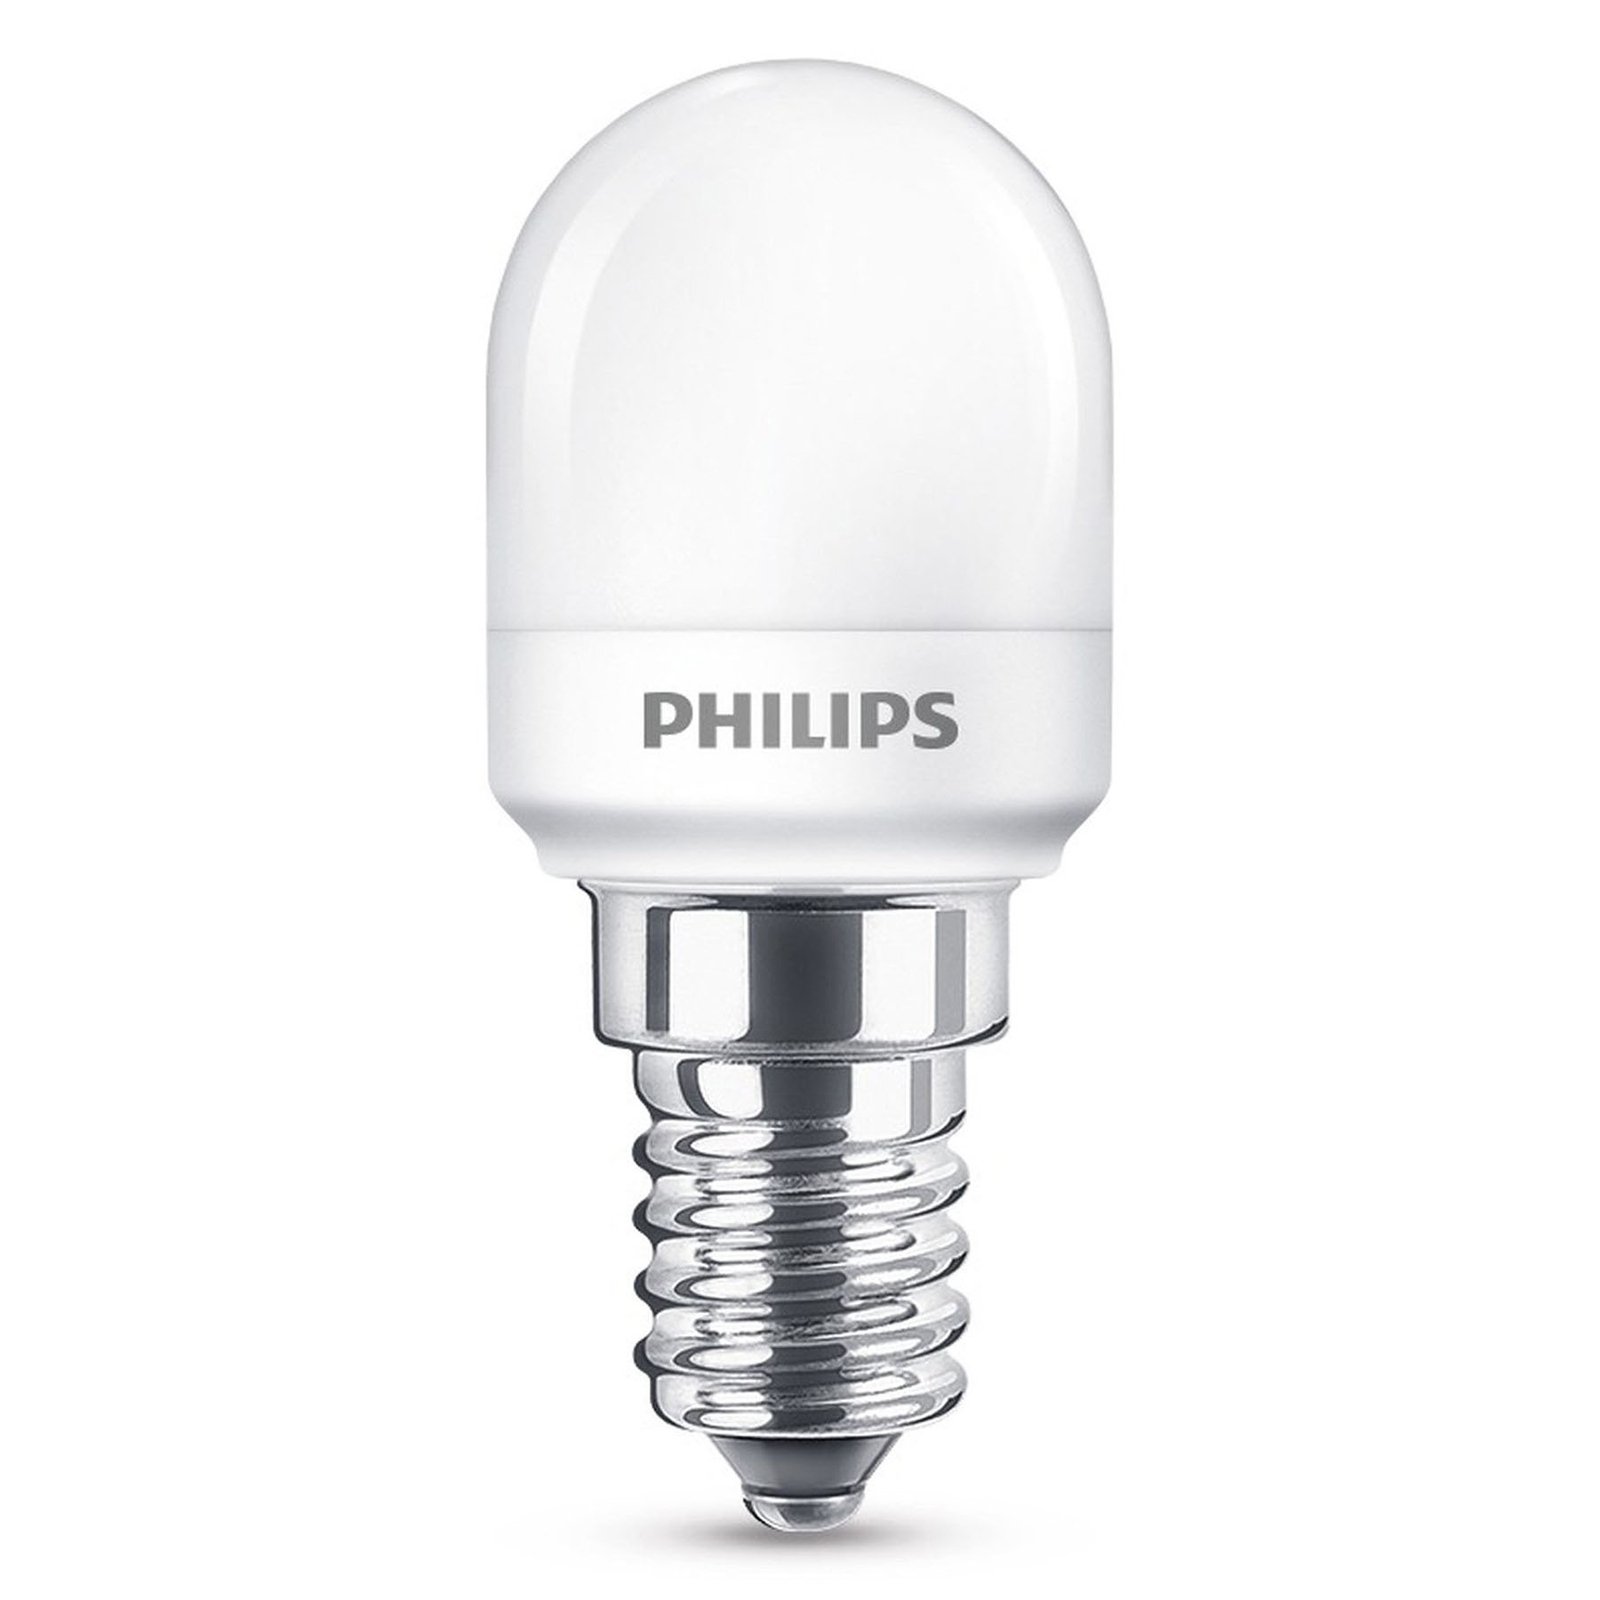 Philips fridge LED bulb E14 T25 0.9 W matt